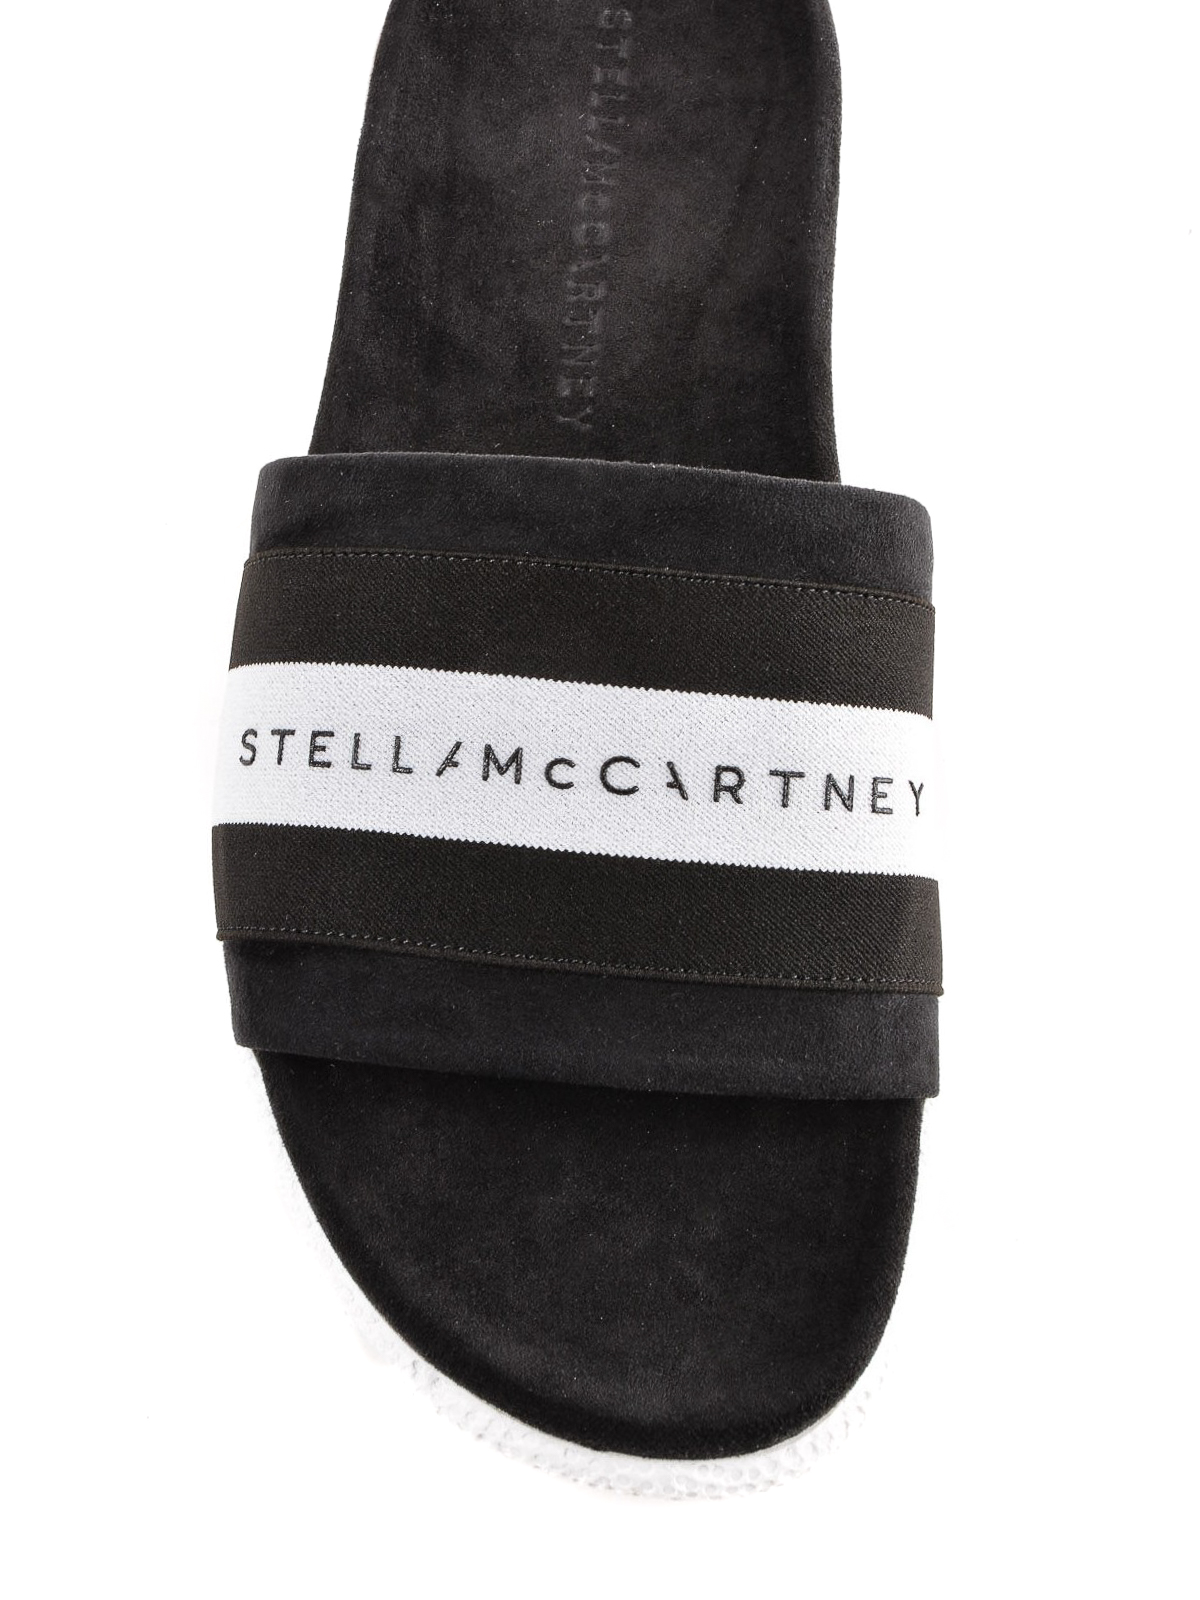 stella mccartney slide sandals